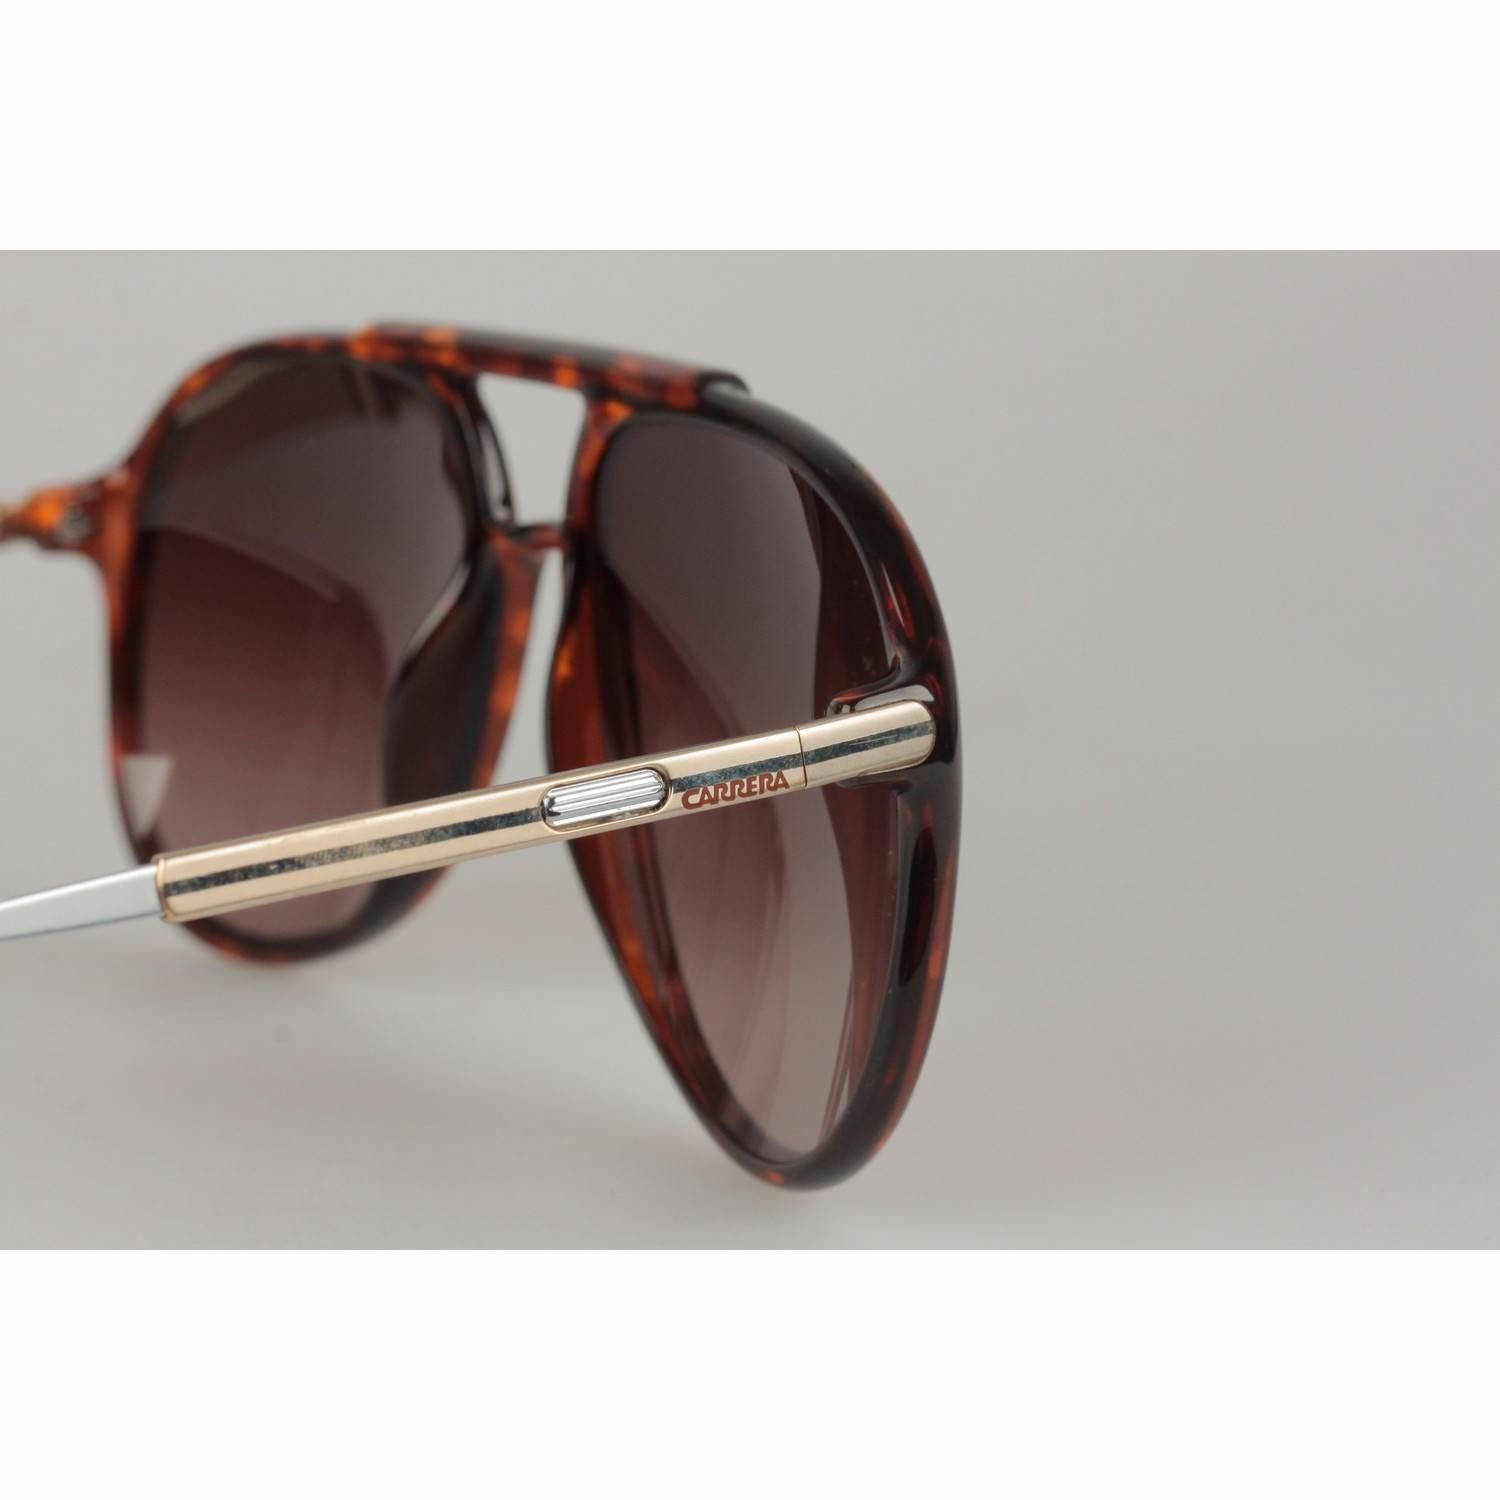 Carrera Vintage Brown Sunglasses 5300E VARIO  1